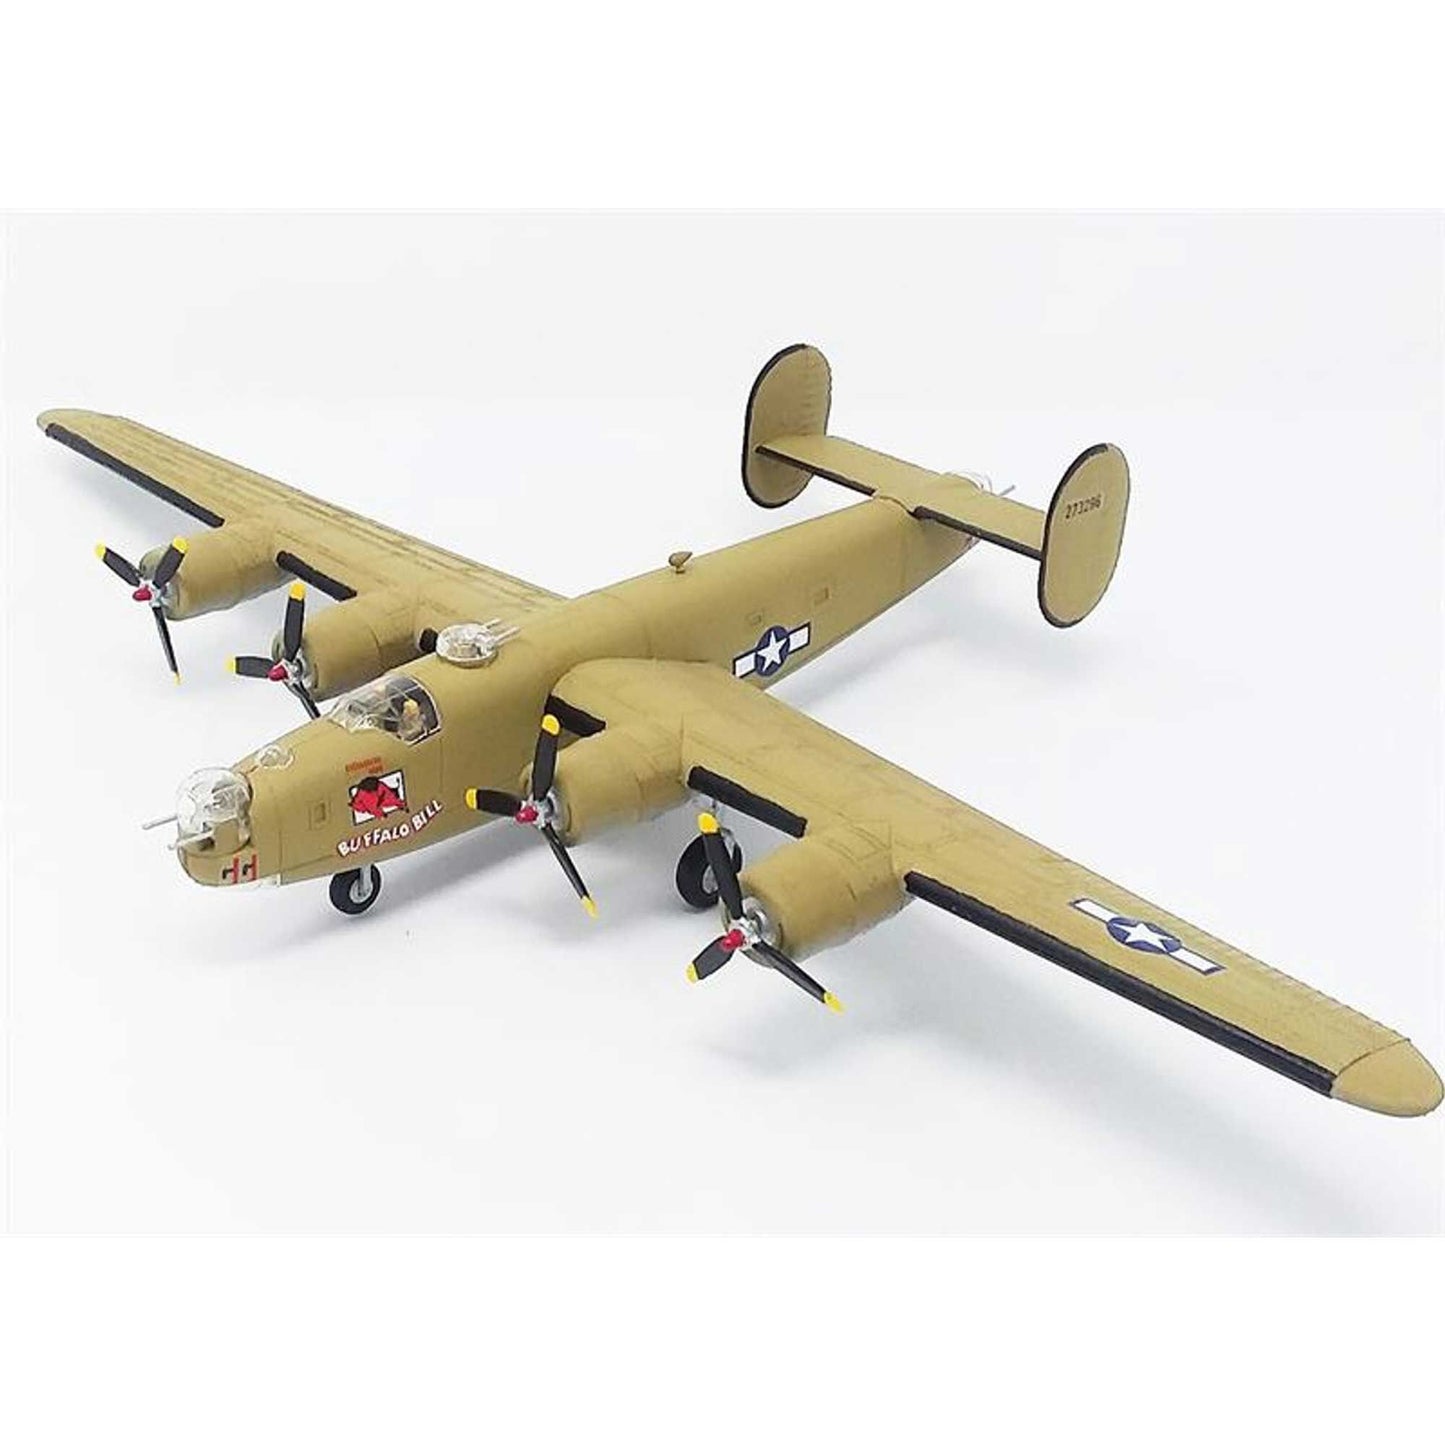 B-24J Liberator Bomber Buffalo Bill 1/92 Model Kit